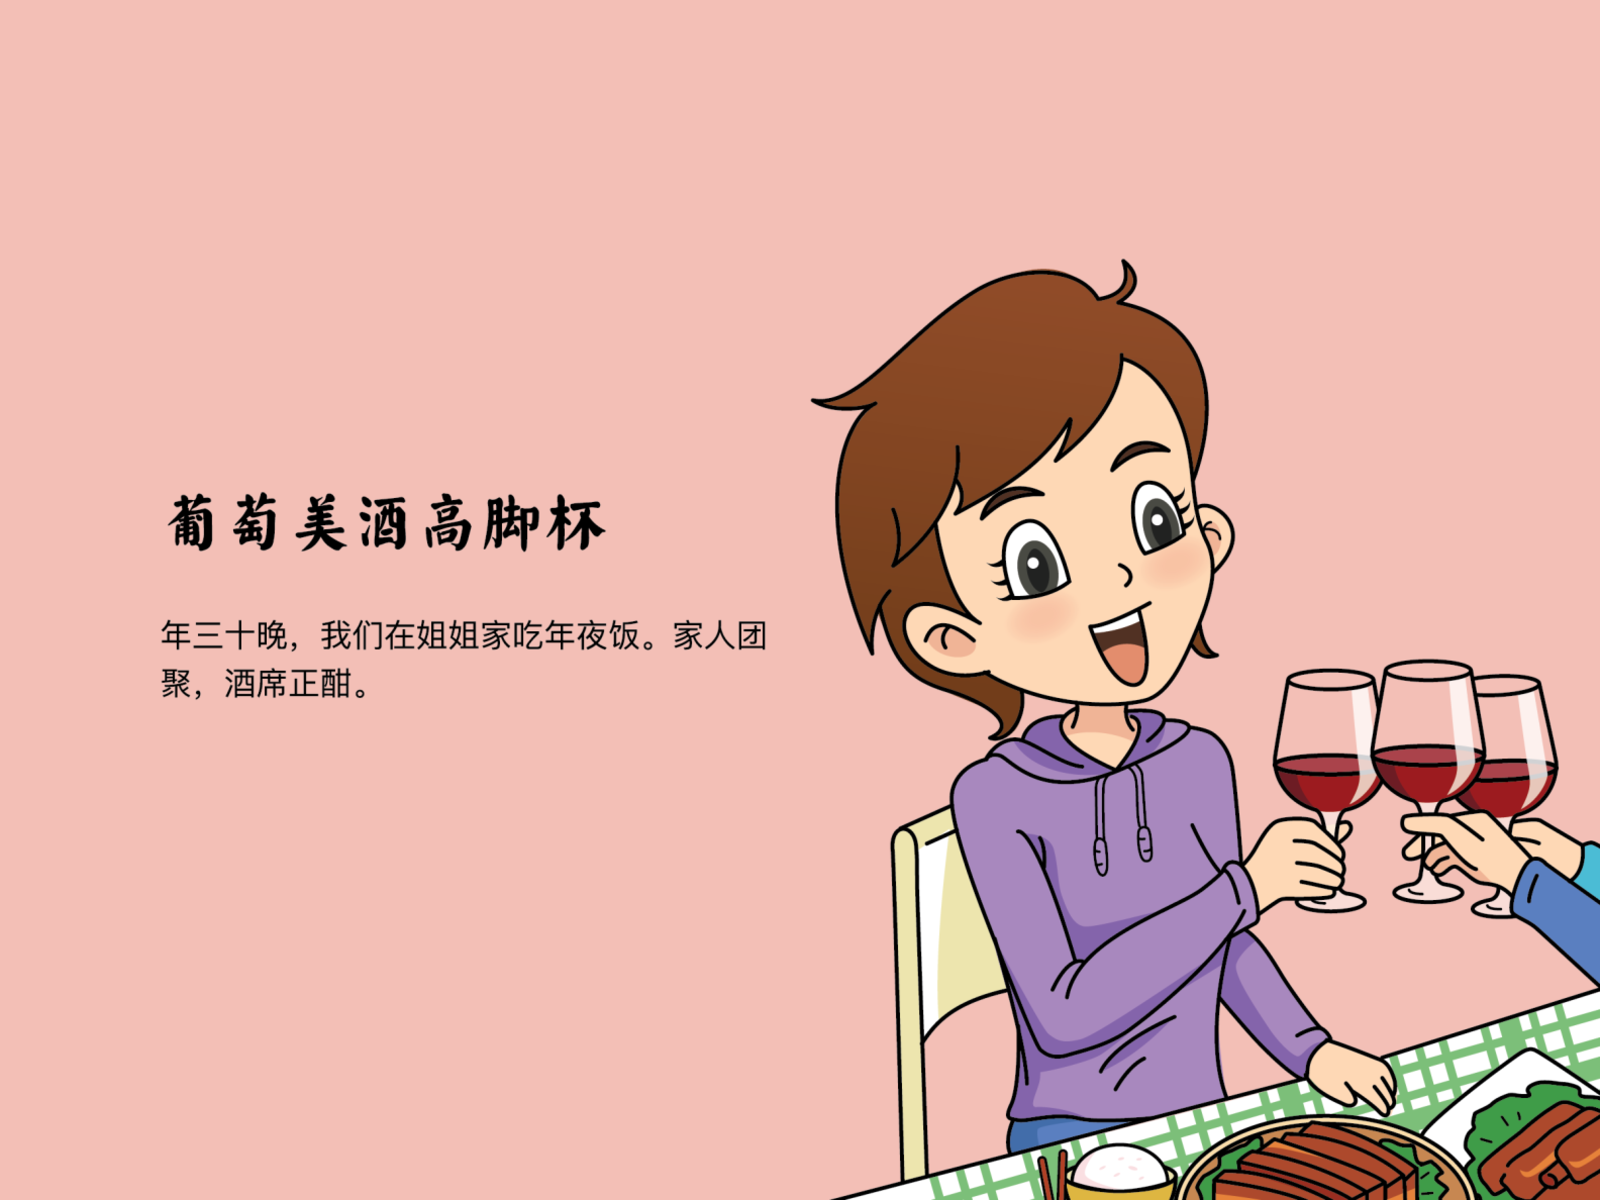 1/4. A story of a nurse who is fighting coronavirus coronavirus dinner girl illustration nurse red wine rice